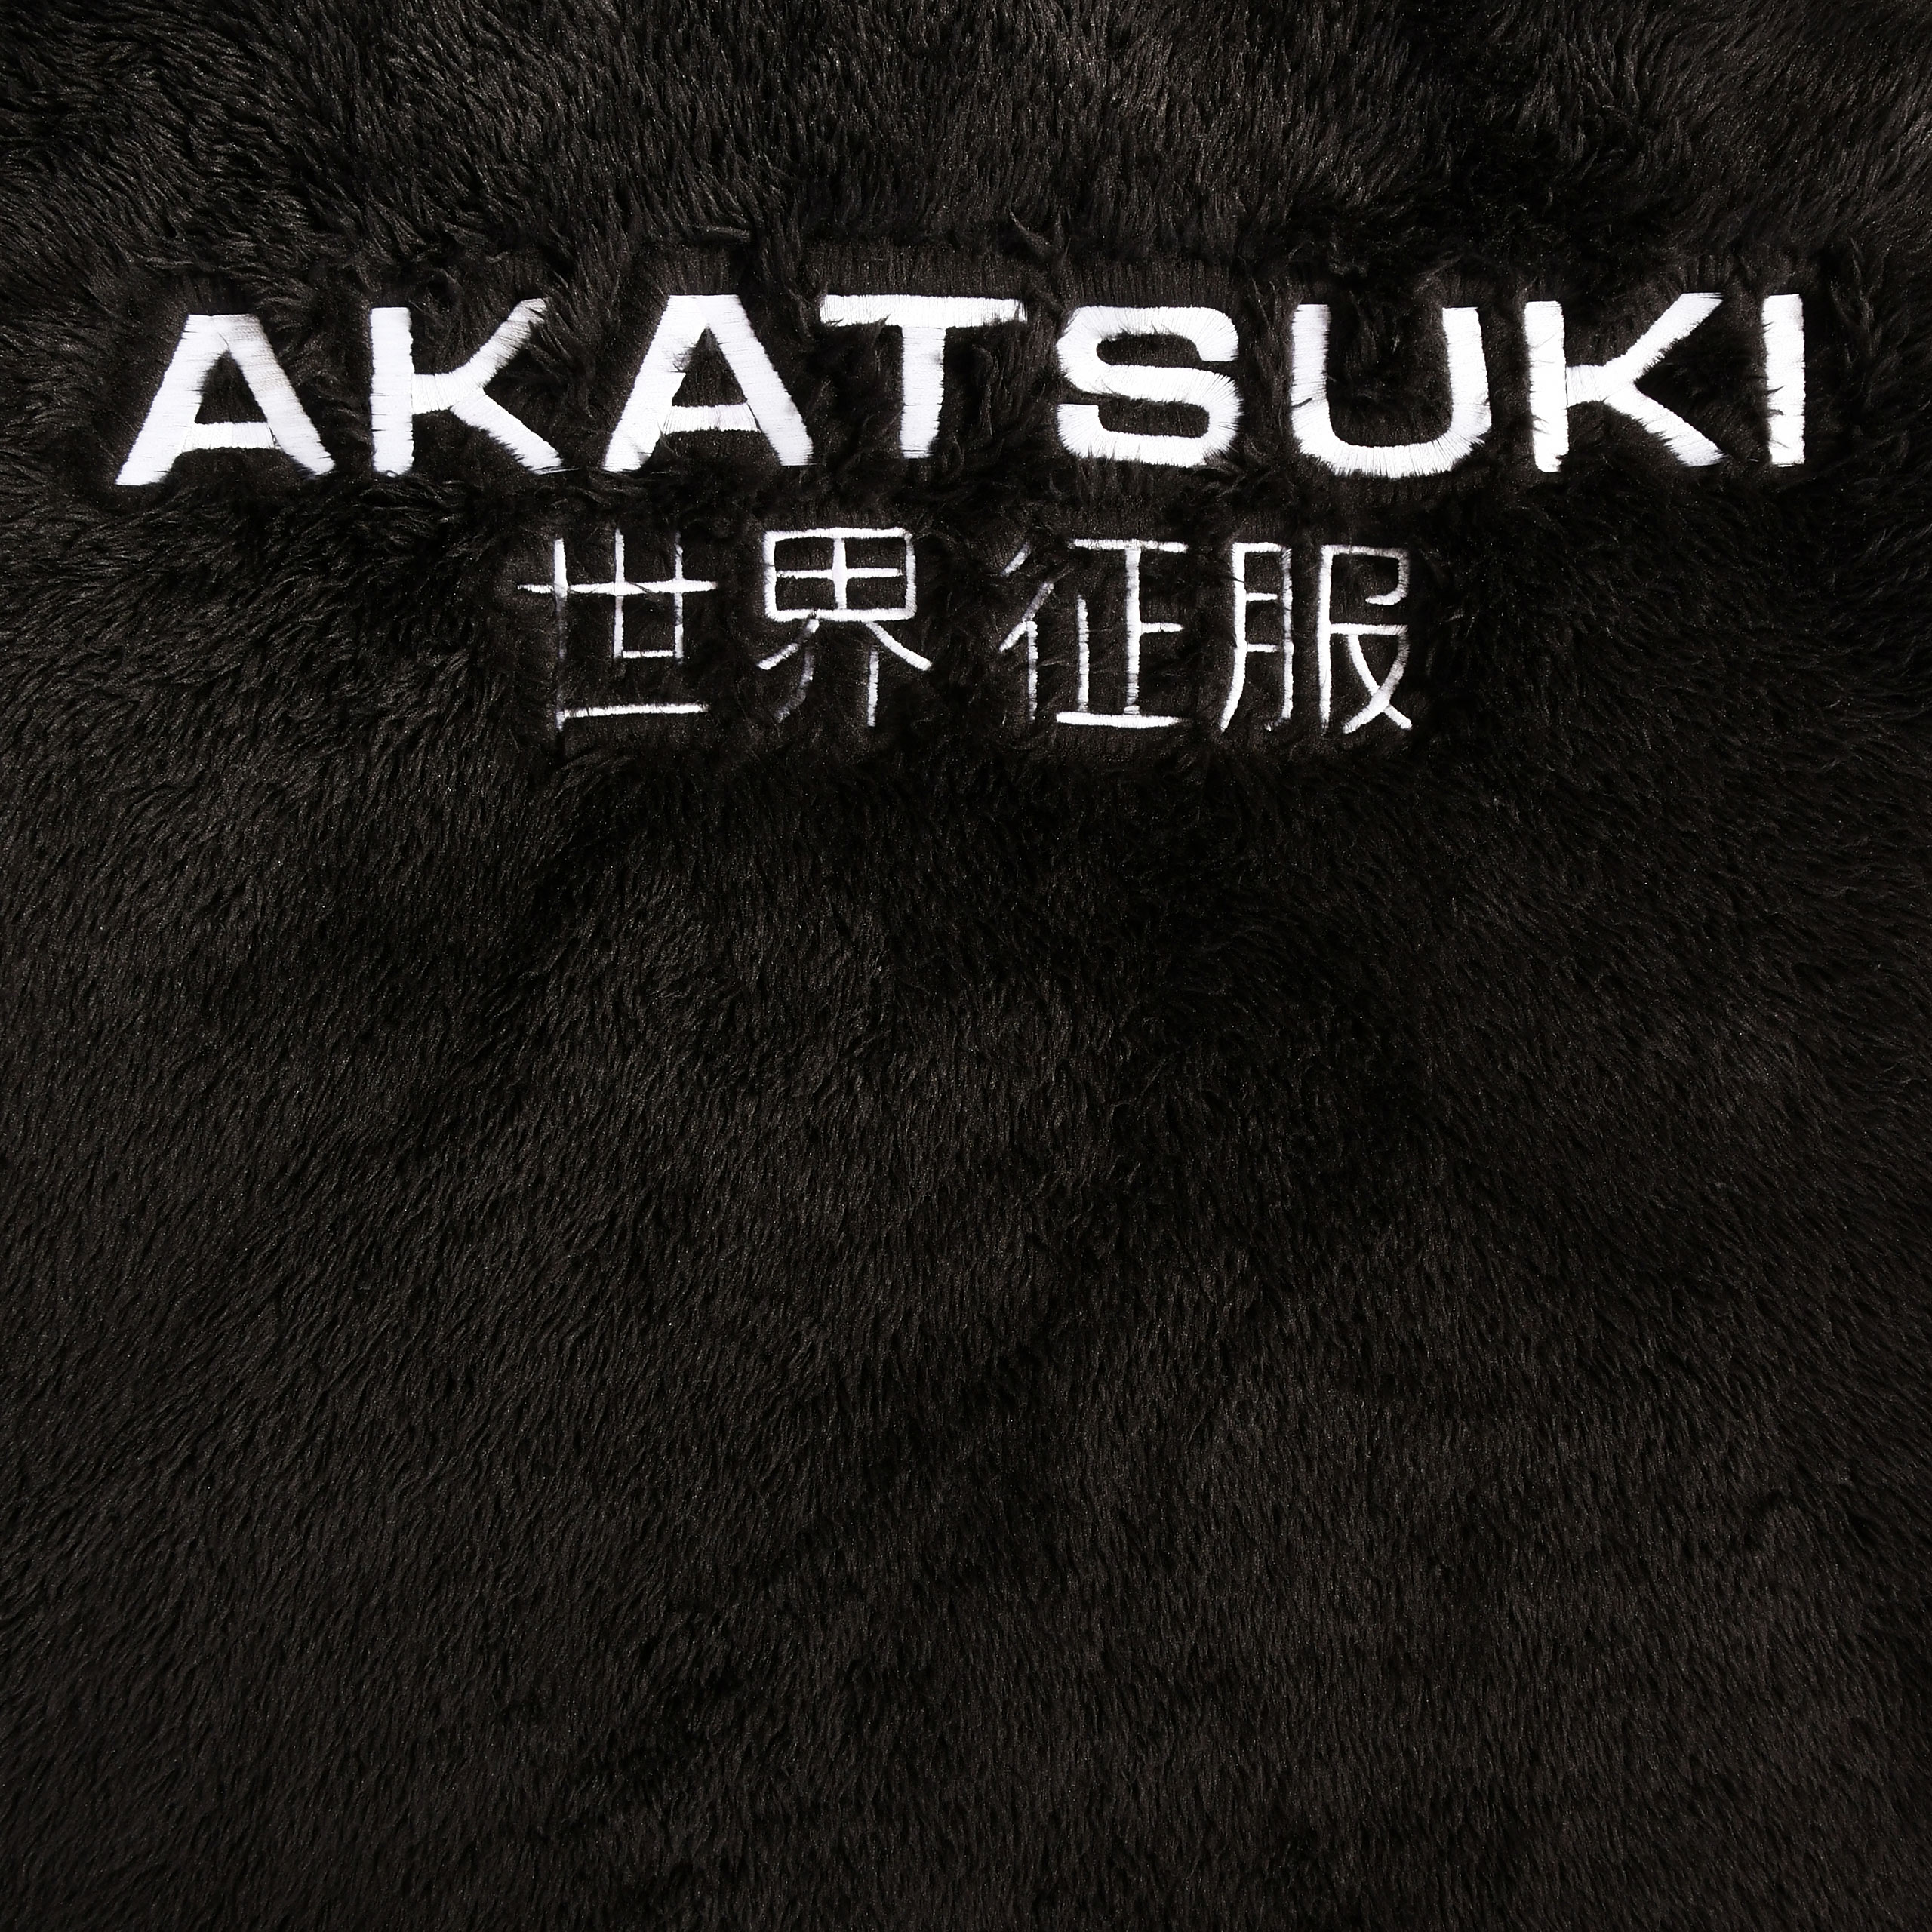 Naruto - Akatsuki Plüsch Jacke mit Kapuze schwarz